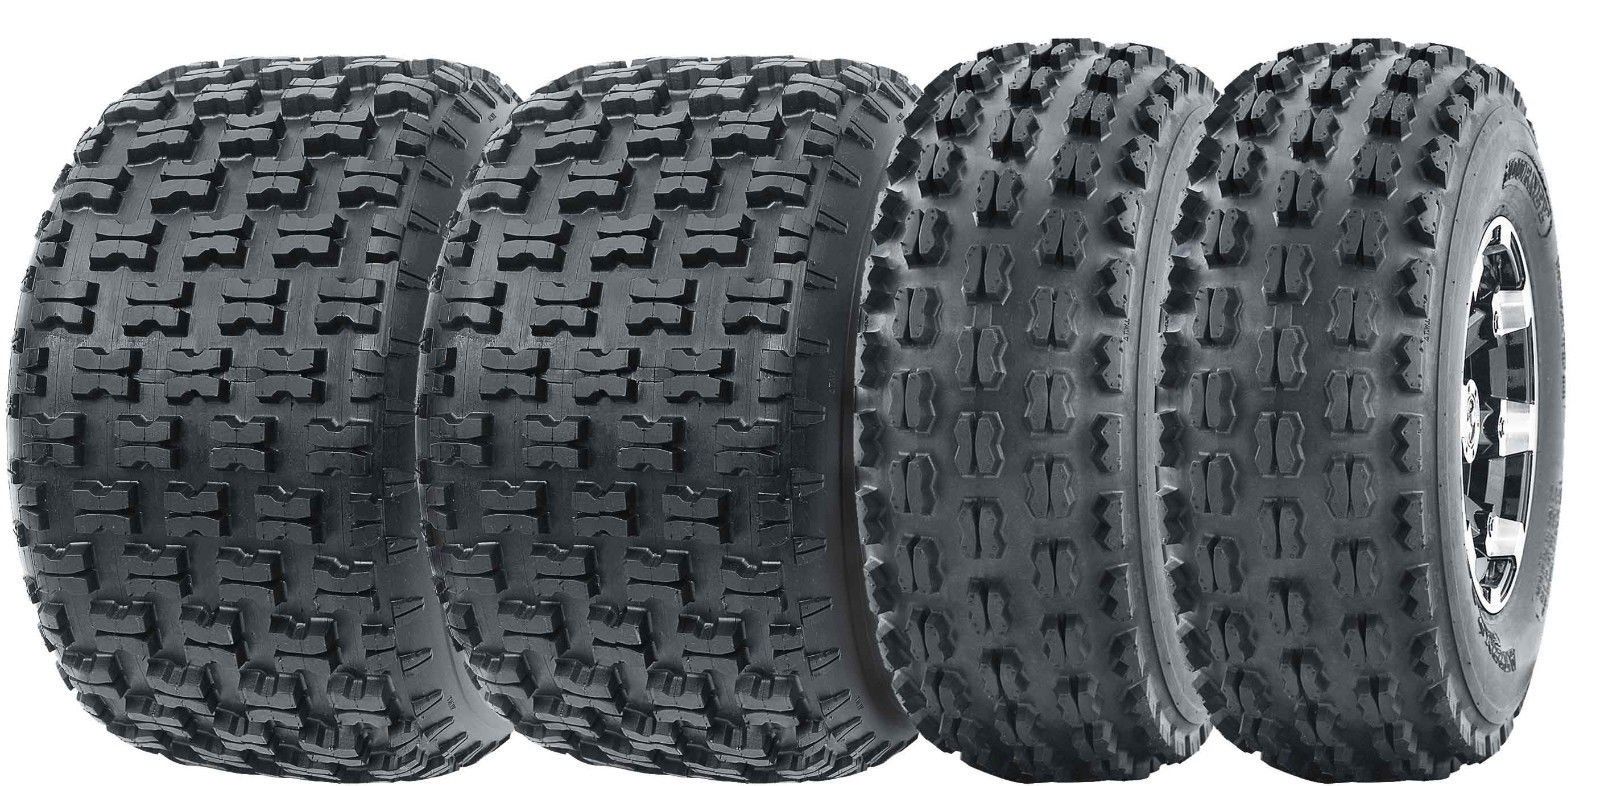 2 VANACC 4 Tire Front set 22X10-10 4 ply ATV Tires 22x7x10 22x10x10 Tubeless 22X7-10 Rear 2 